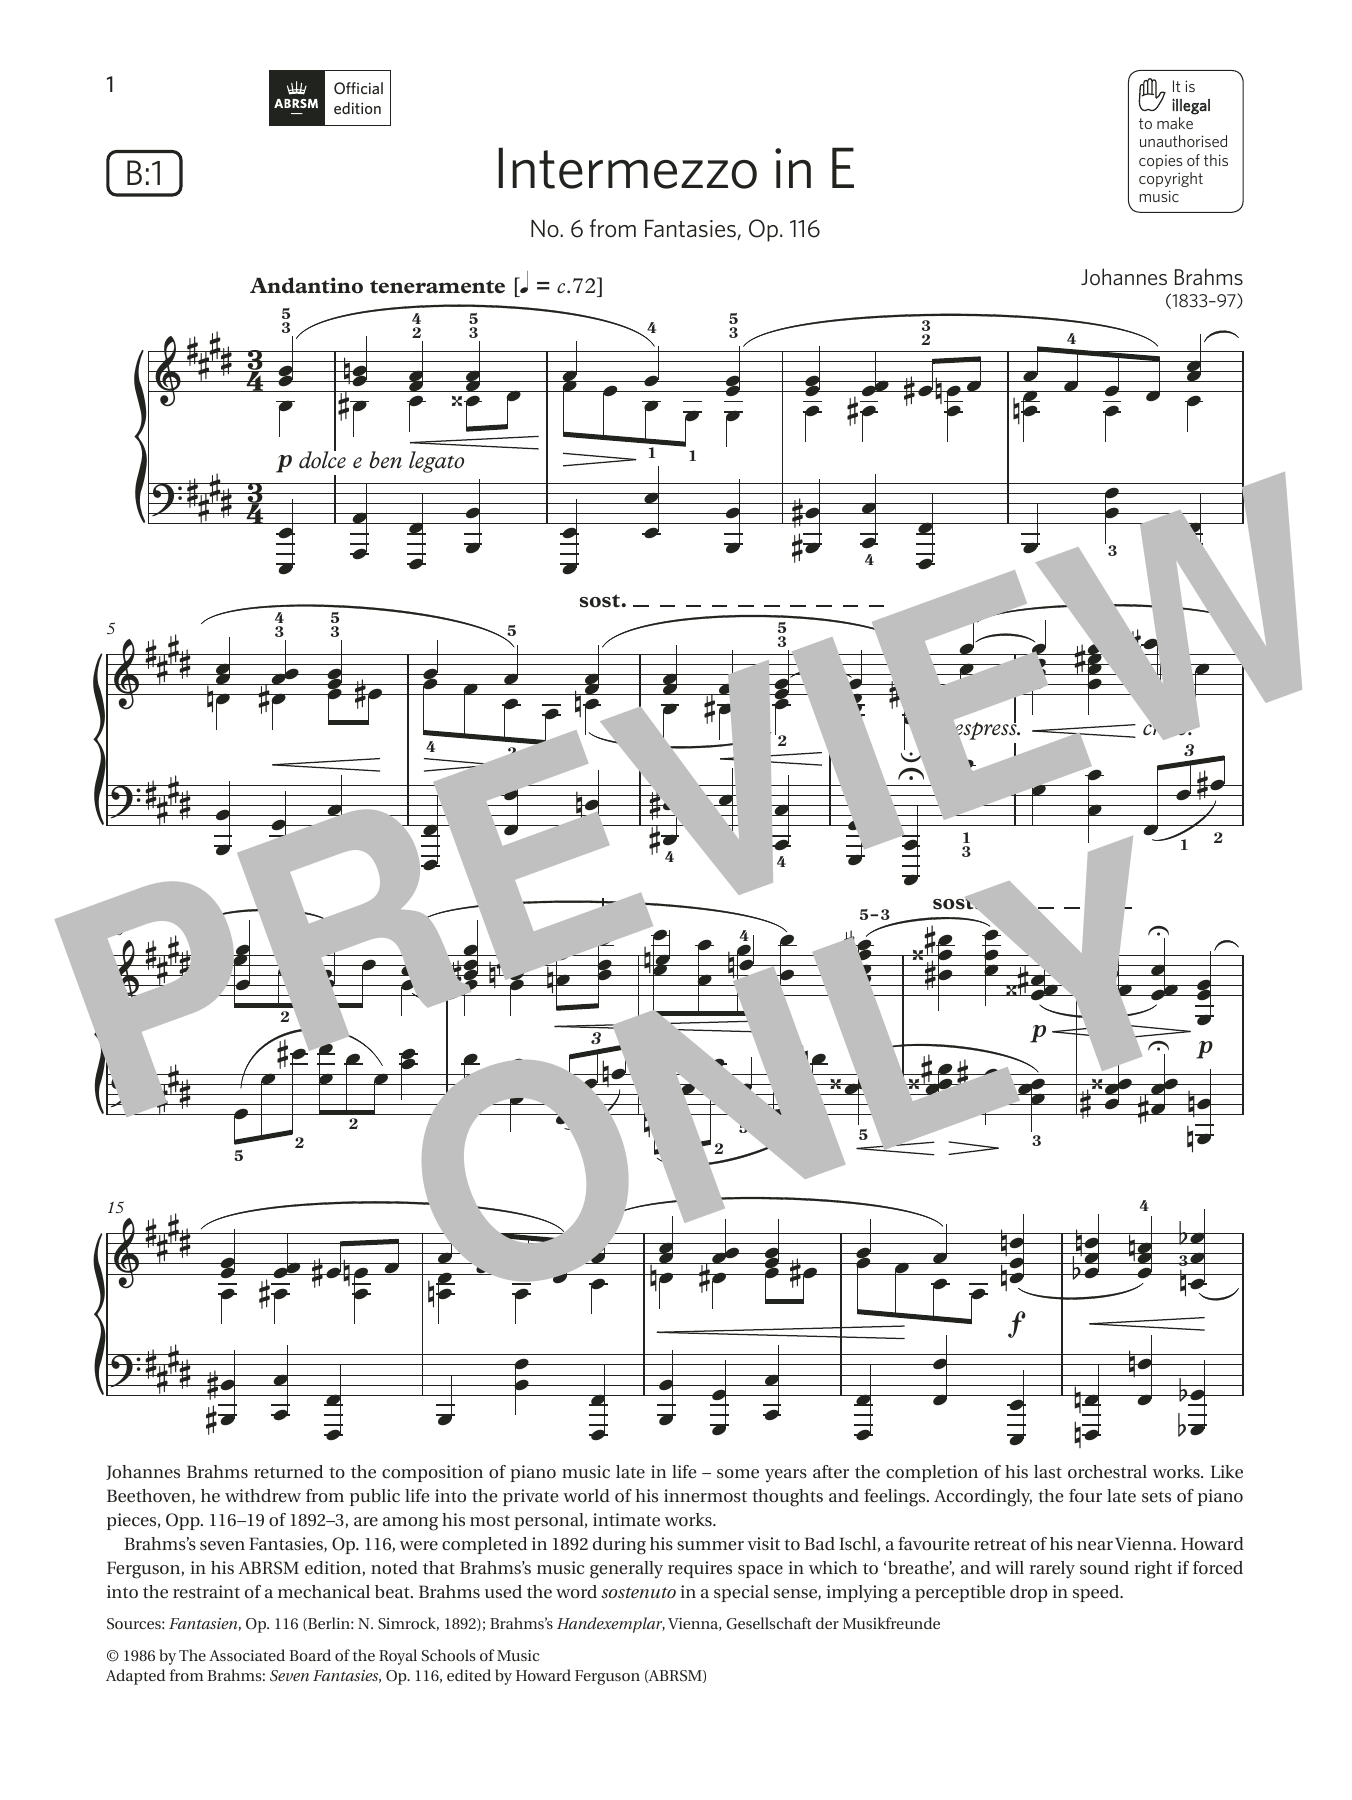 Download Johannes Brahms Intermezzo in E (Grade 8, list B1, from Sheet Music